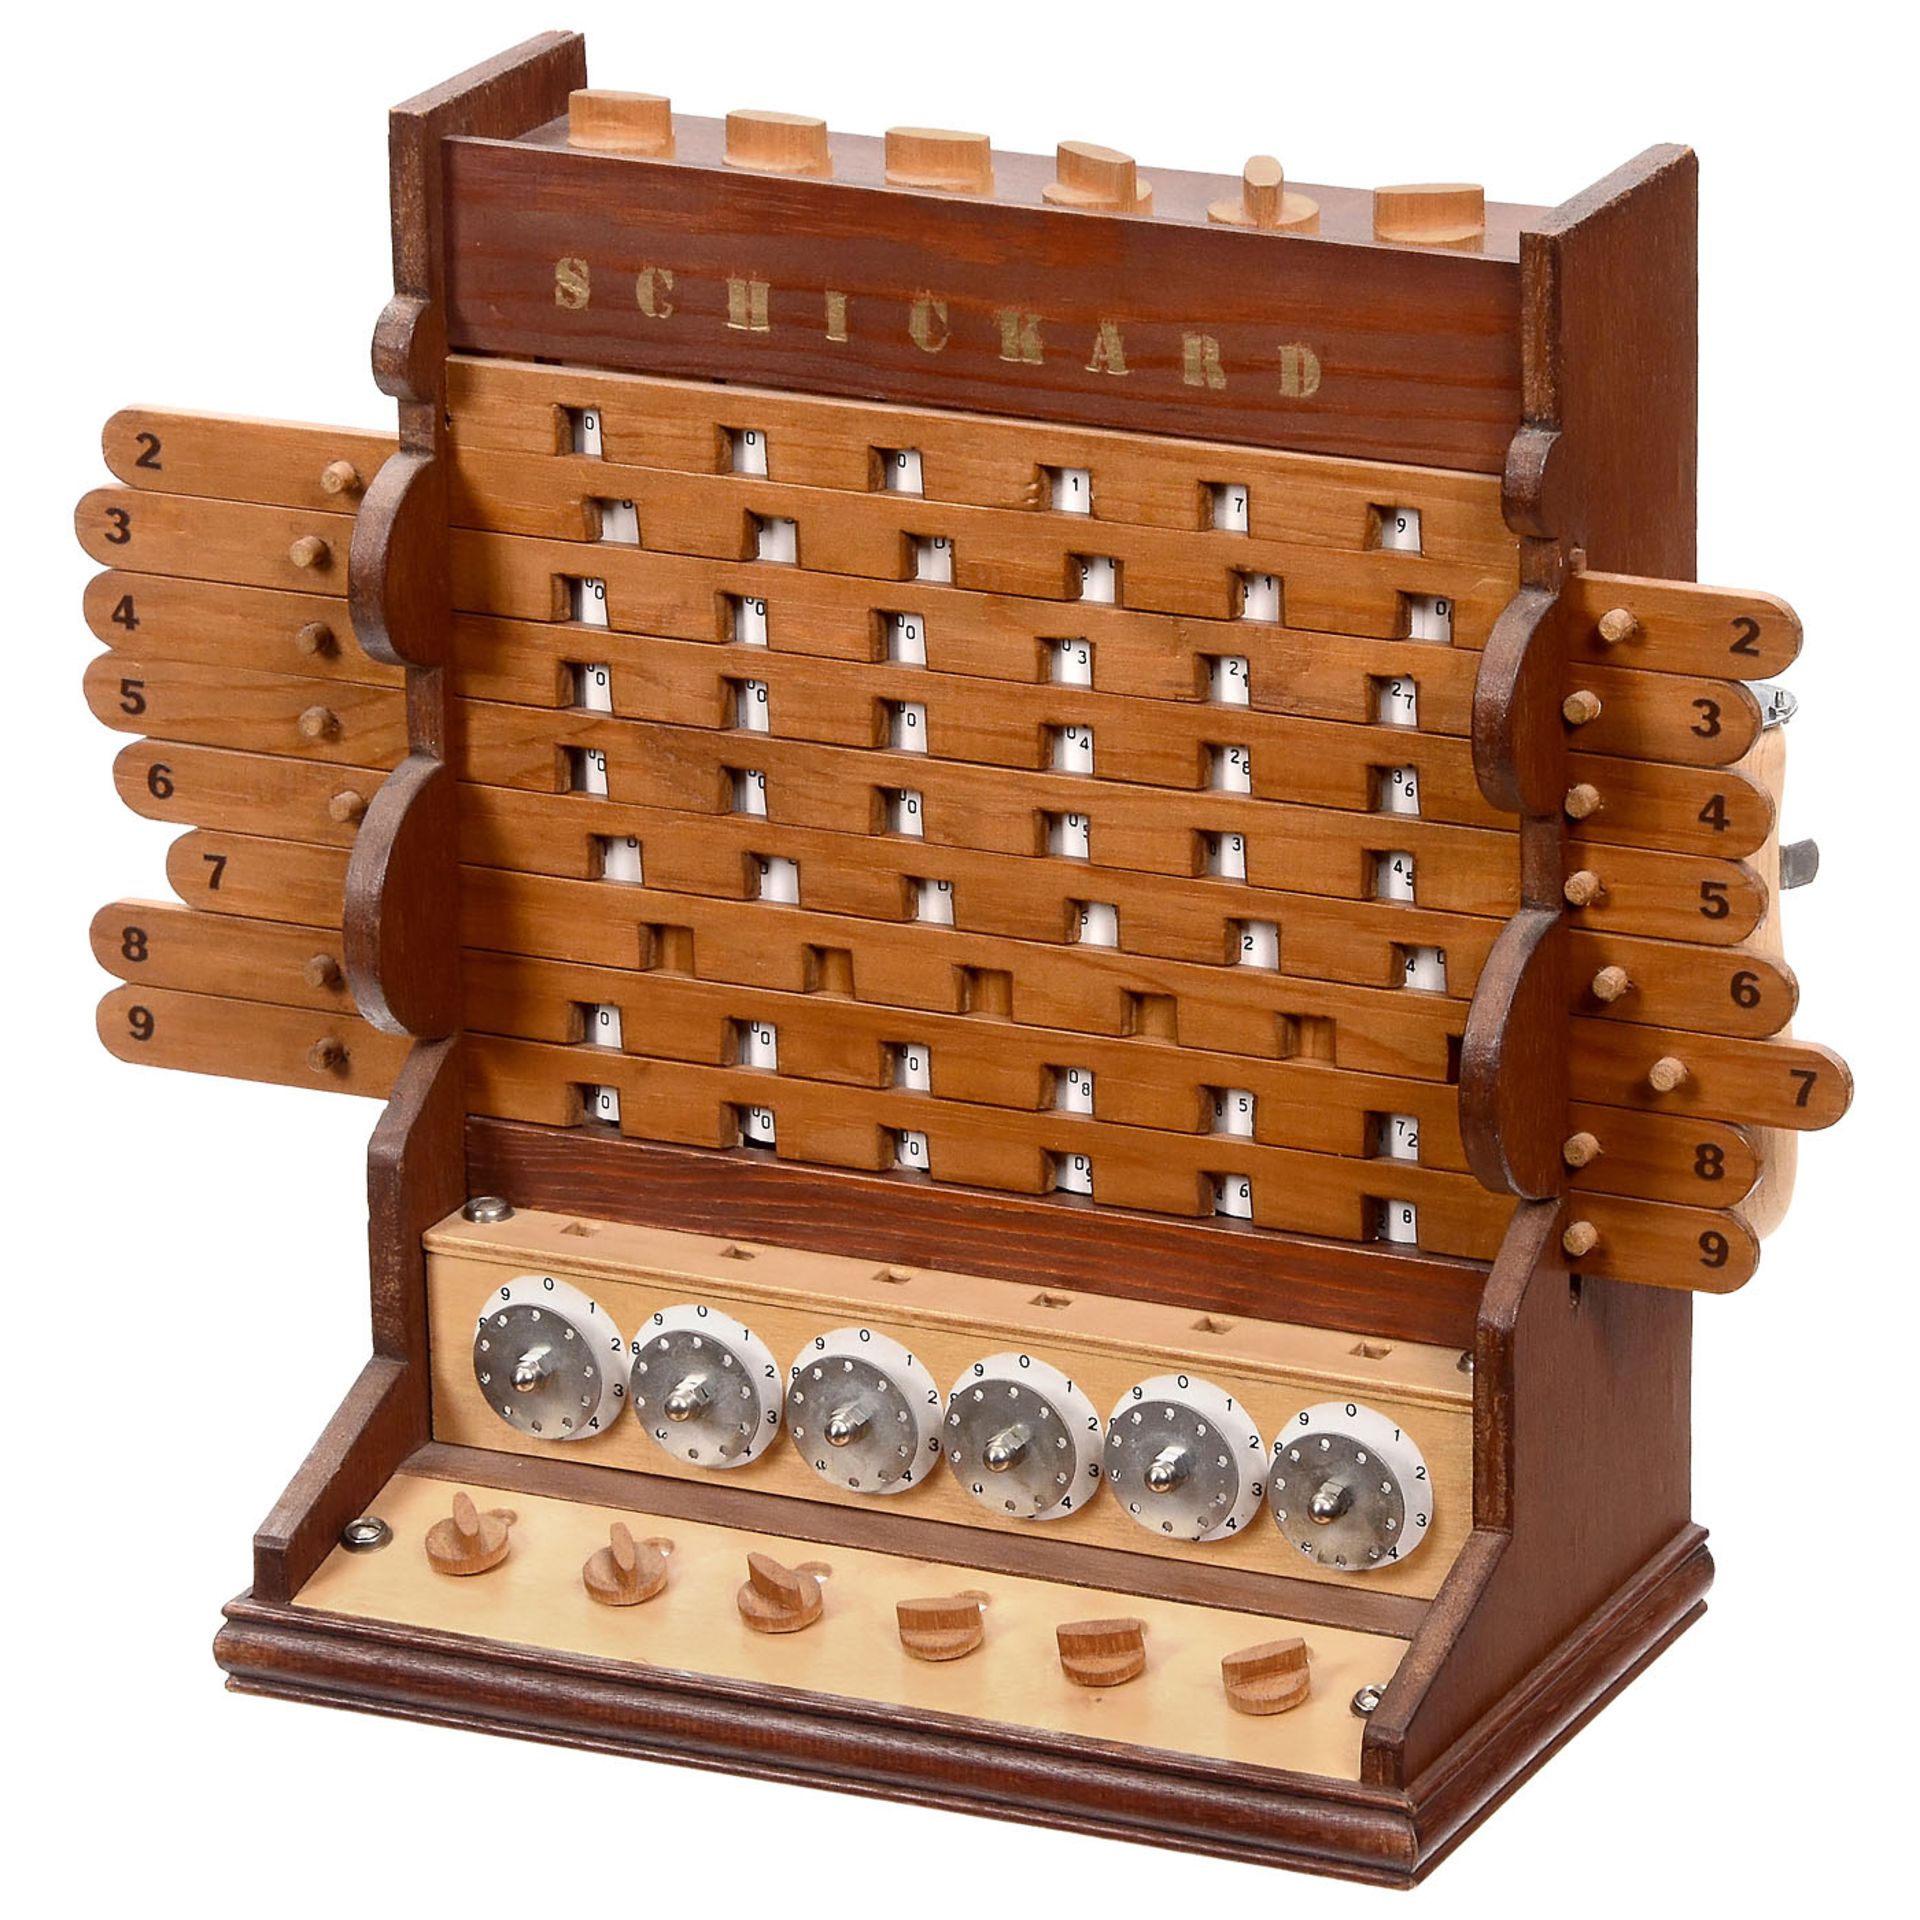 Replica of Wilhelm Schickard's Mechanical Calculating Machine of 1623